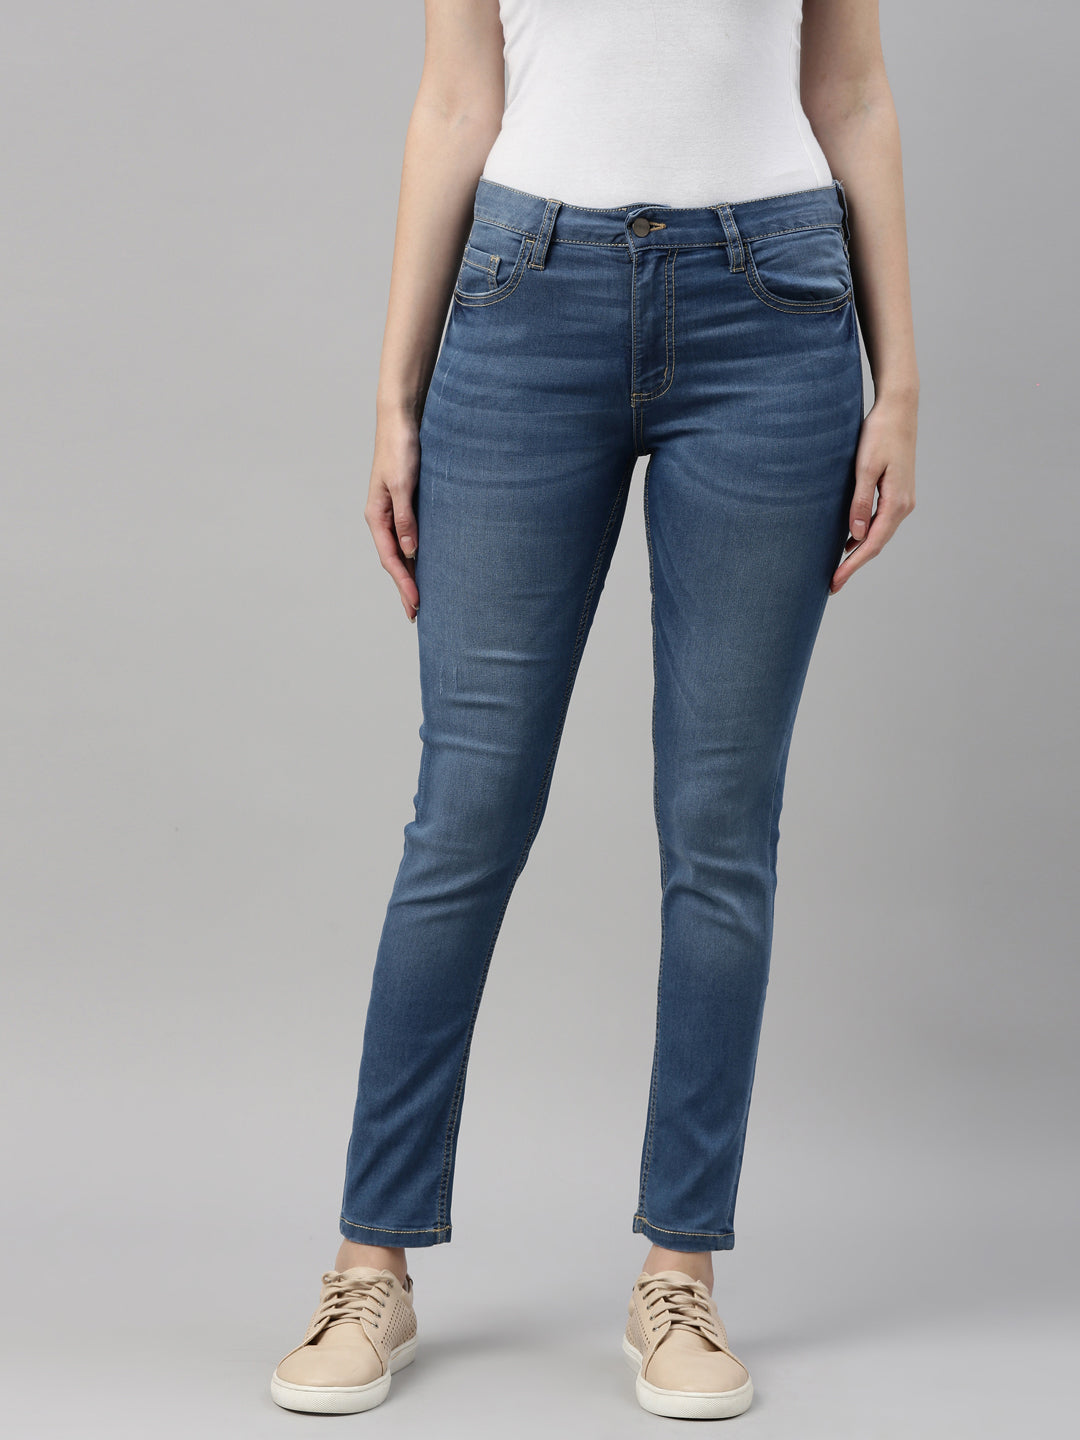 Shop Women's Solid Light Blue High Rise Skinny Jeans Online